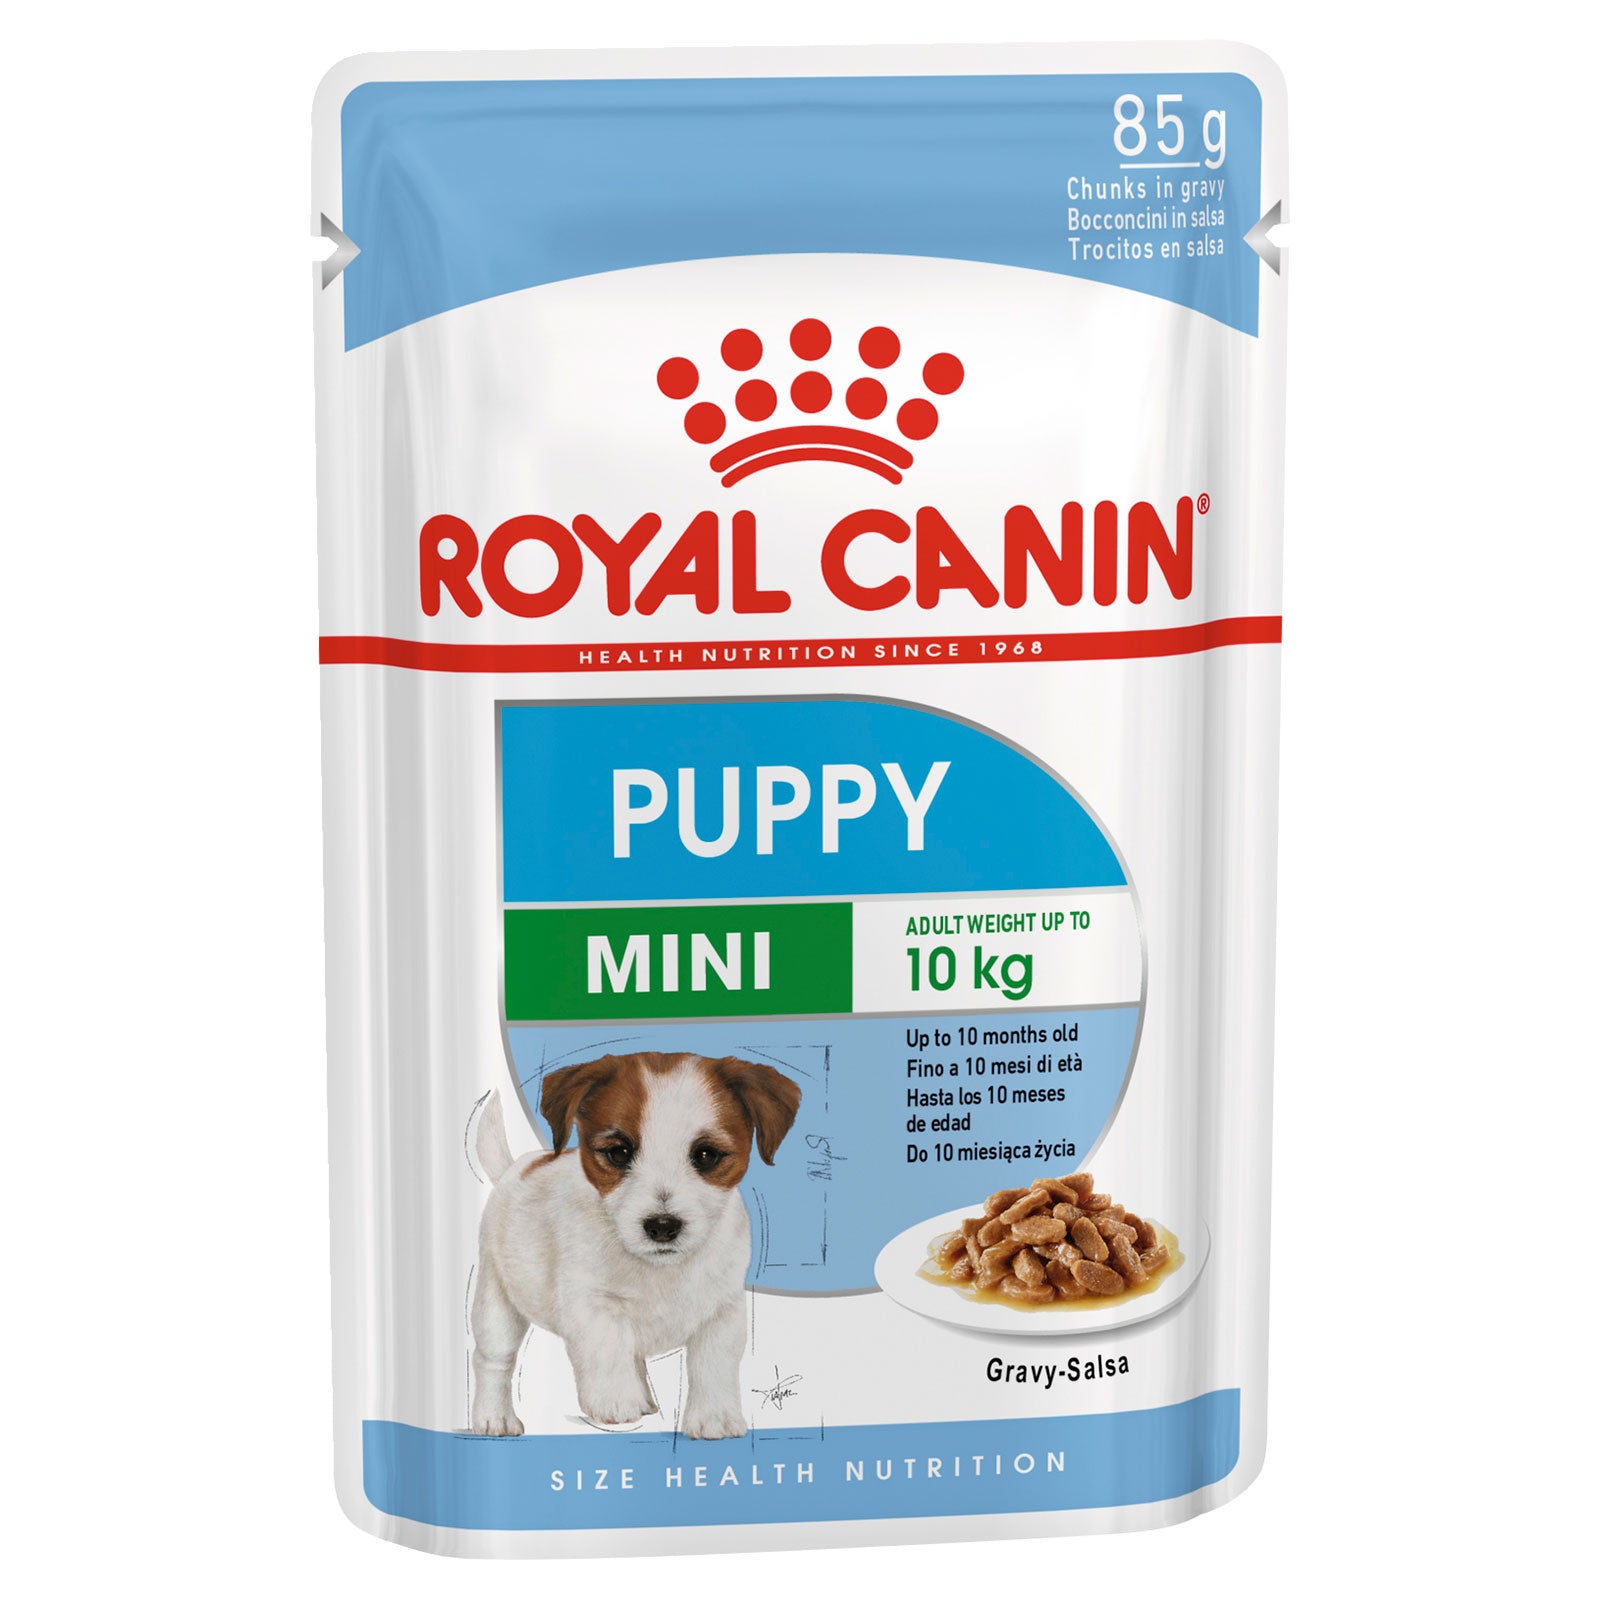 Royal Canin Dog Food Pouch Puppy Mini